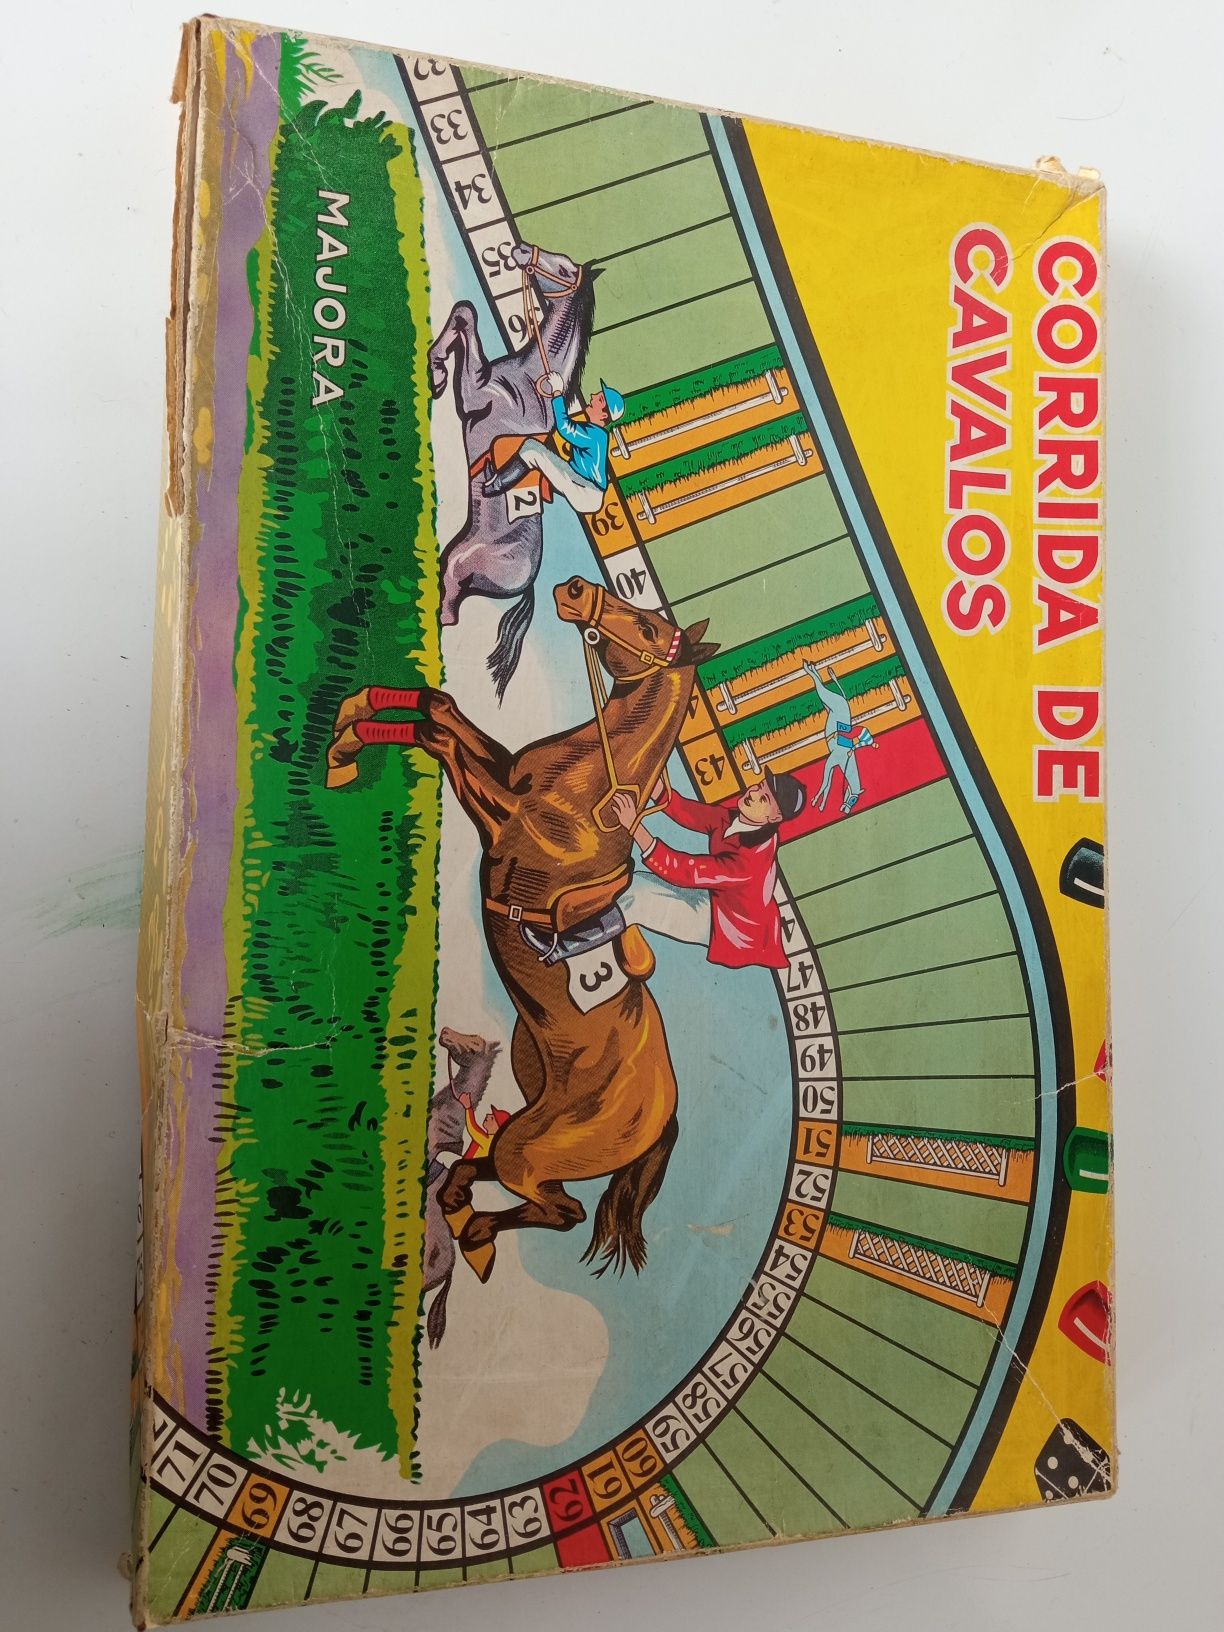 Jogo corrida de cavalos majora + oferta tabuleiro kart Cedofeita